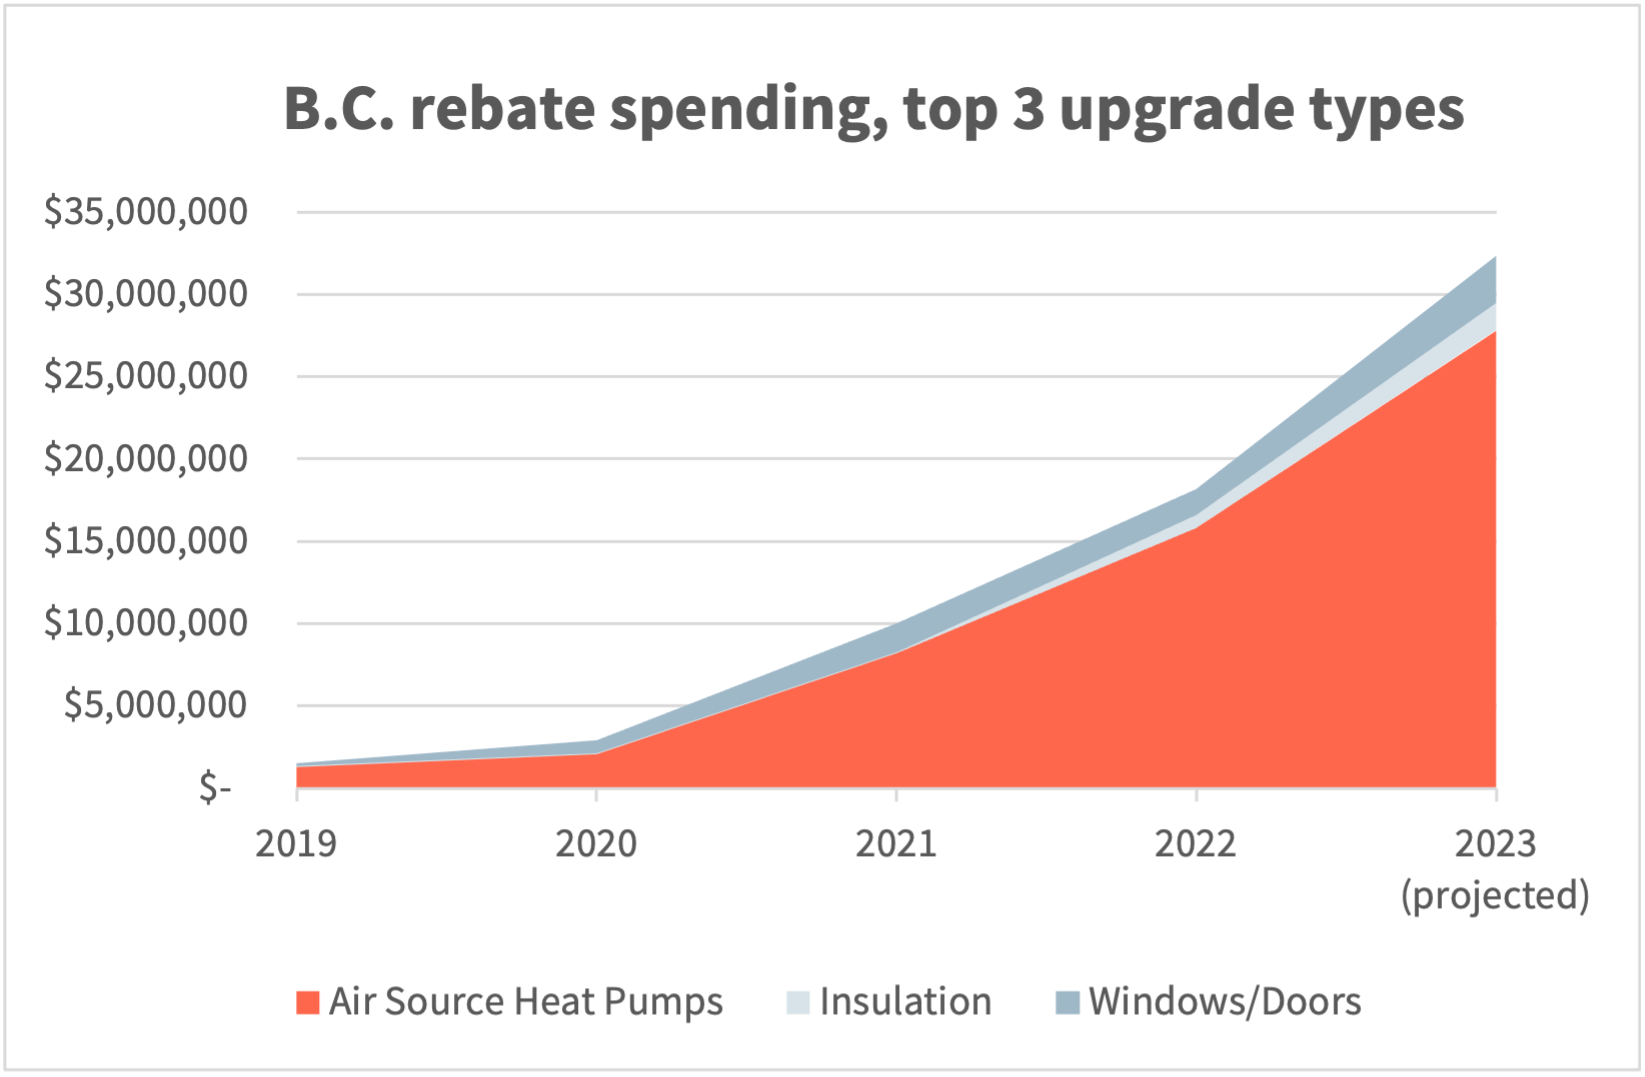 B.C. Rebate Spending, Top 3 Upgrade Types